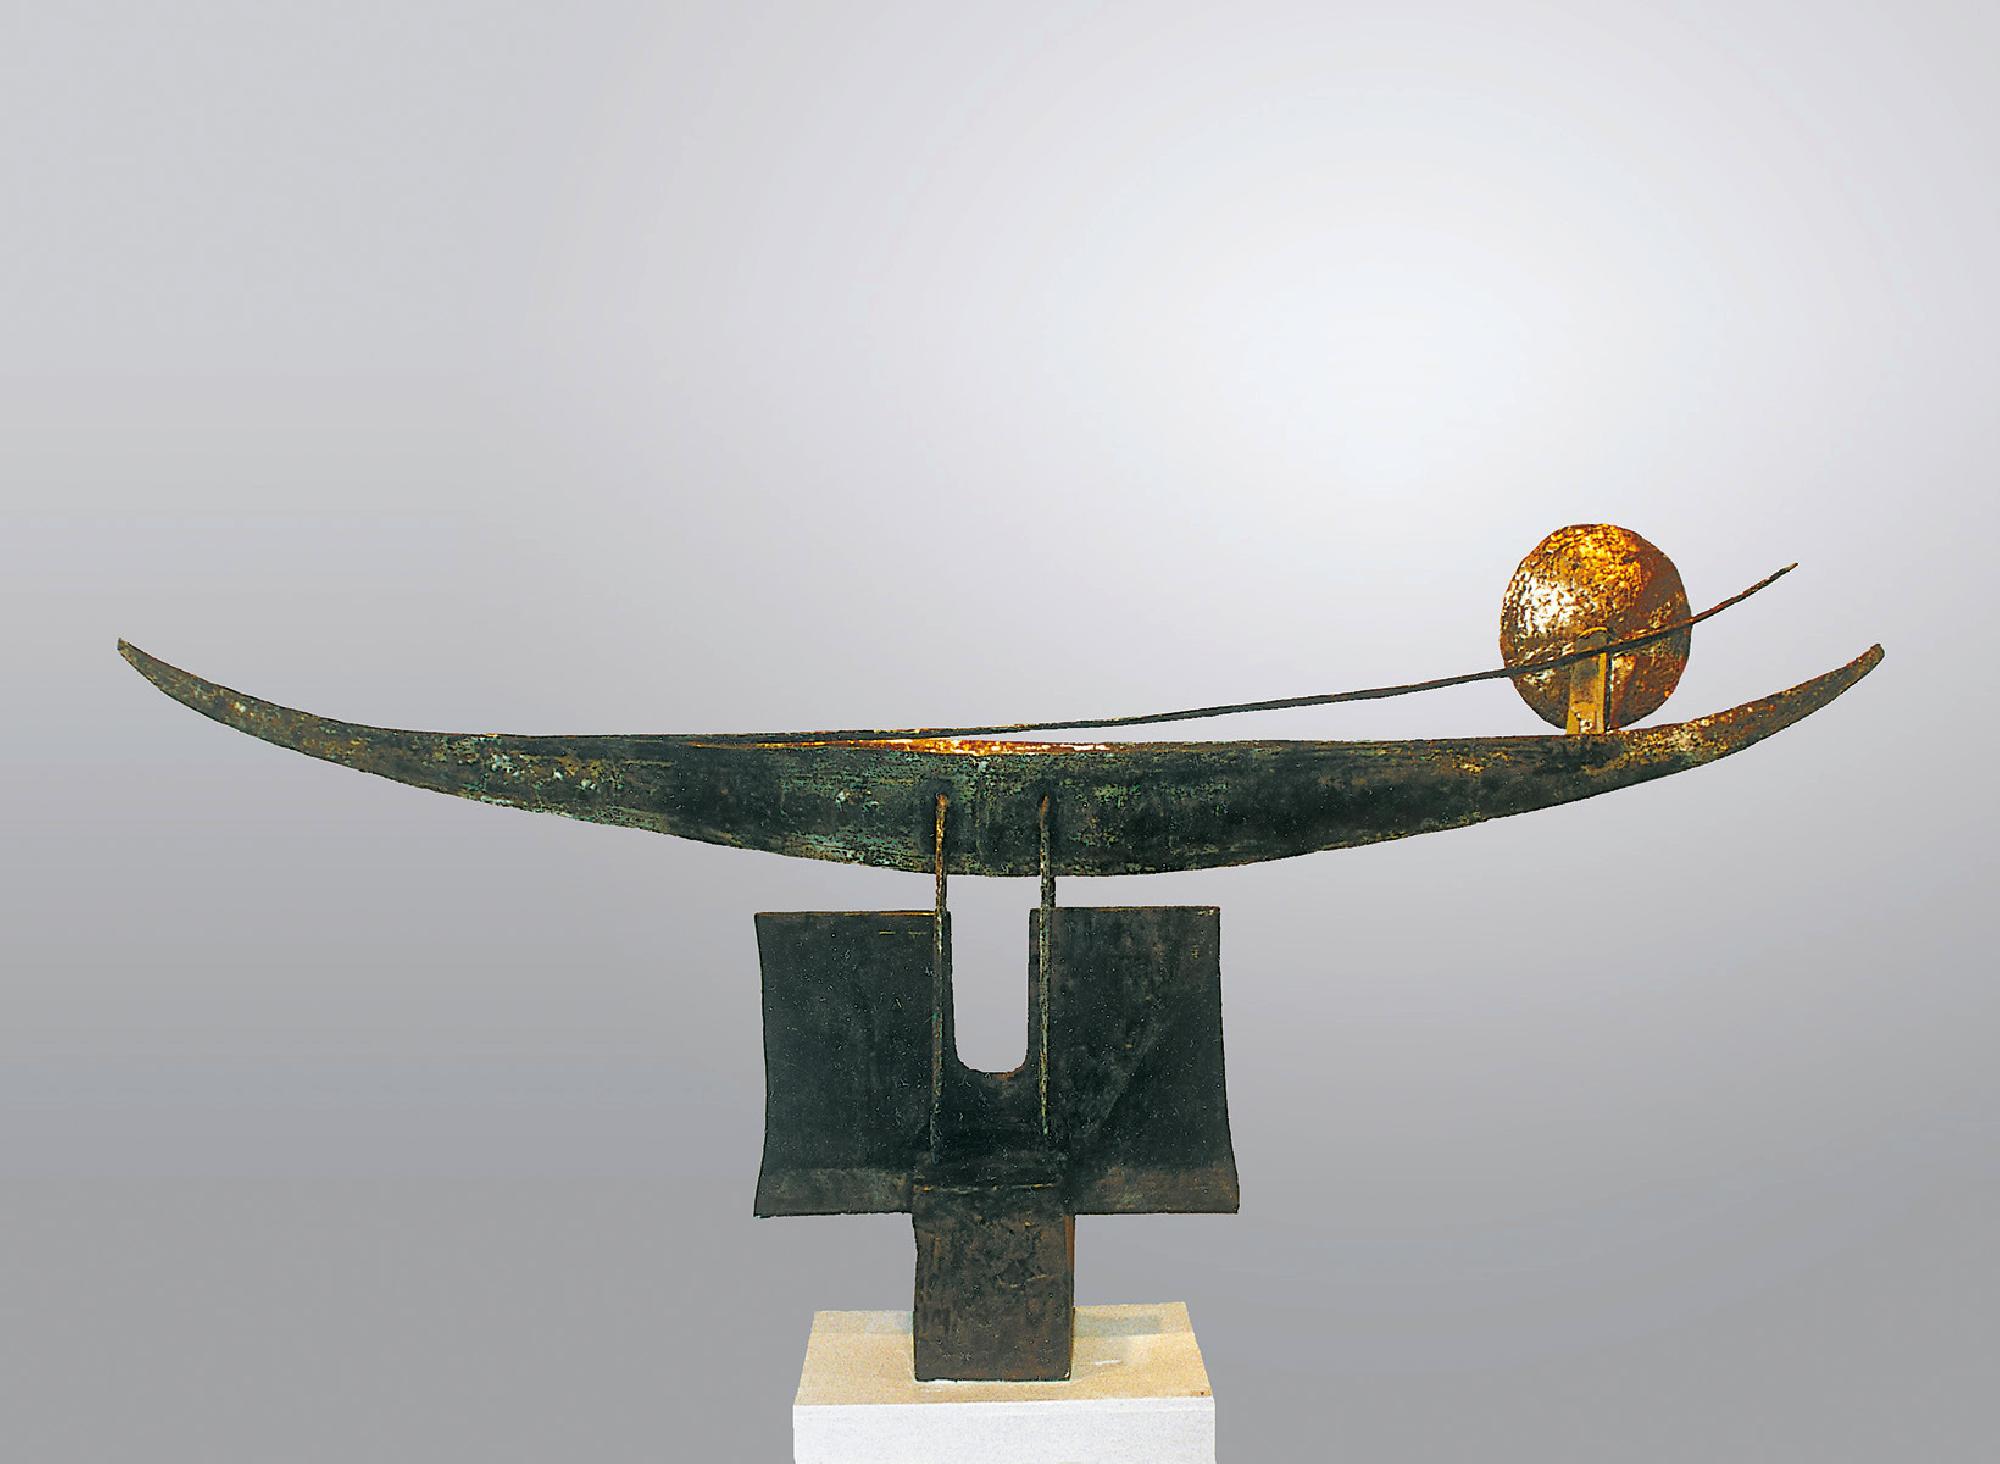 Leonard Lorenz: Beyond the Horizon there is Continuation
1992
310 × 90 × 50 cm
bronze